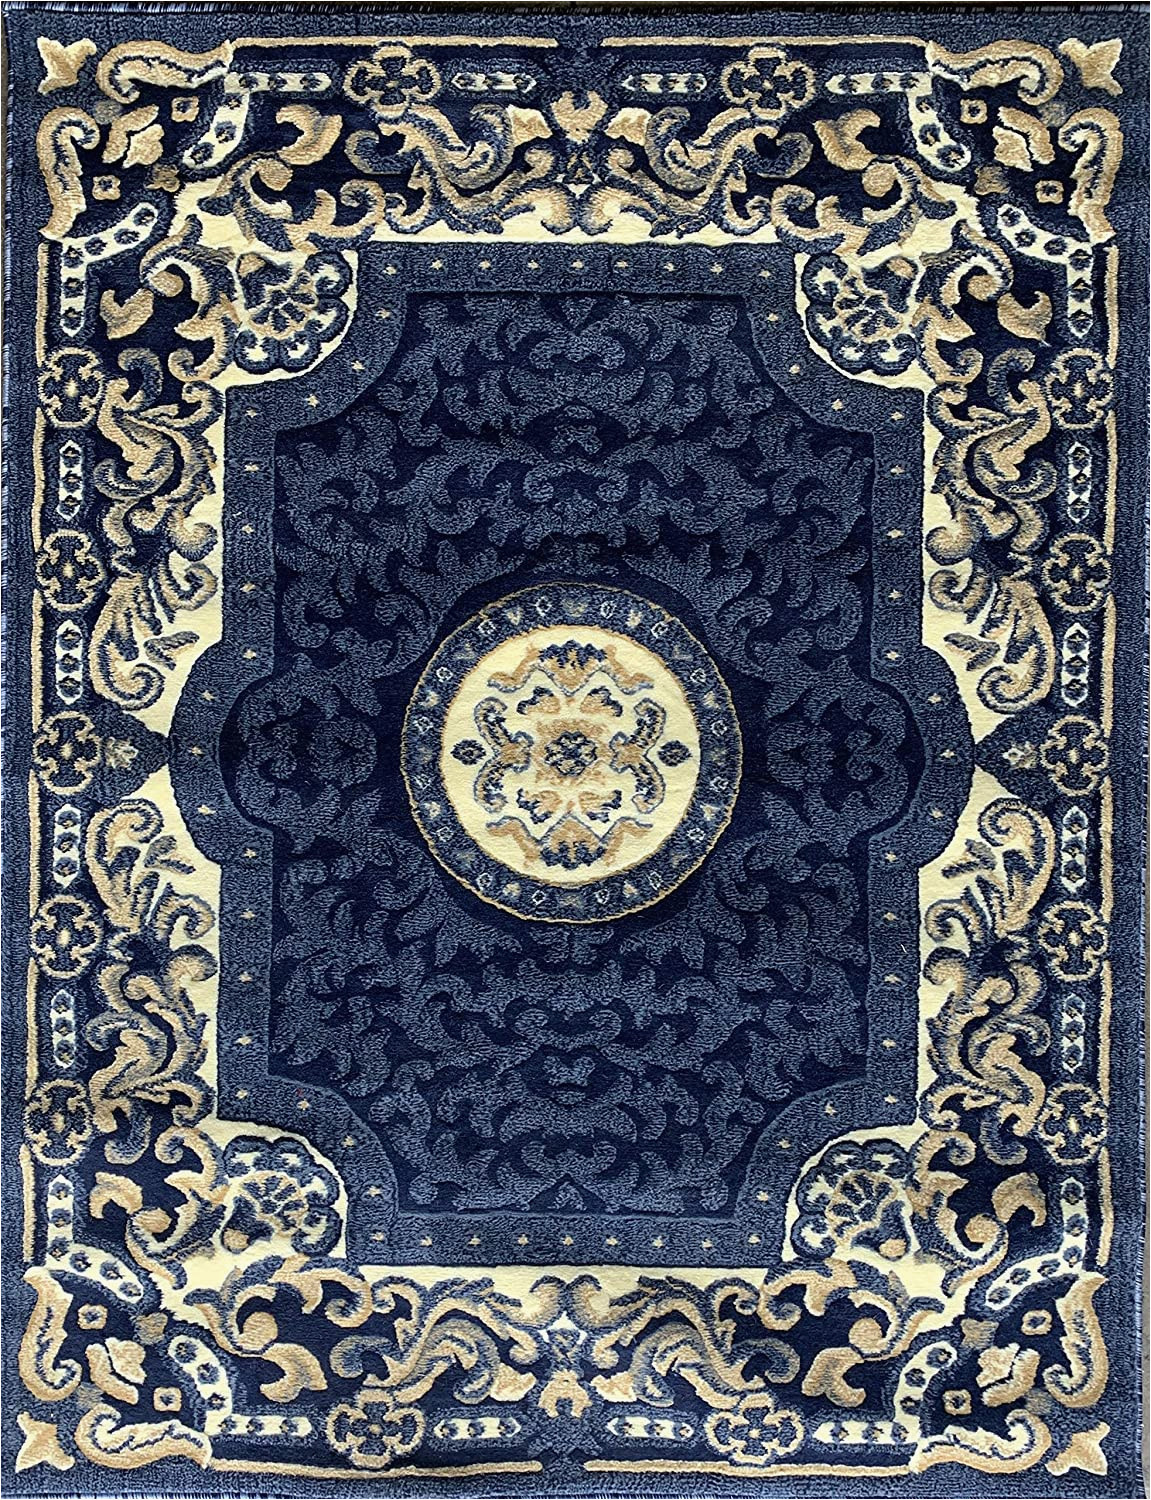 Blue oriental area Rug Traditional Persian oriental area Rug Dark Navy Blue Beige Carpet King Design 101 8 Feet X 10 Feet 6 Inch